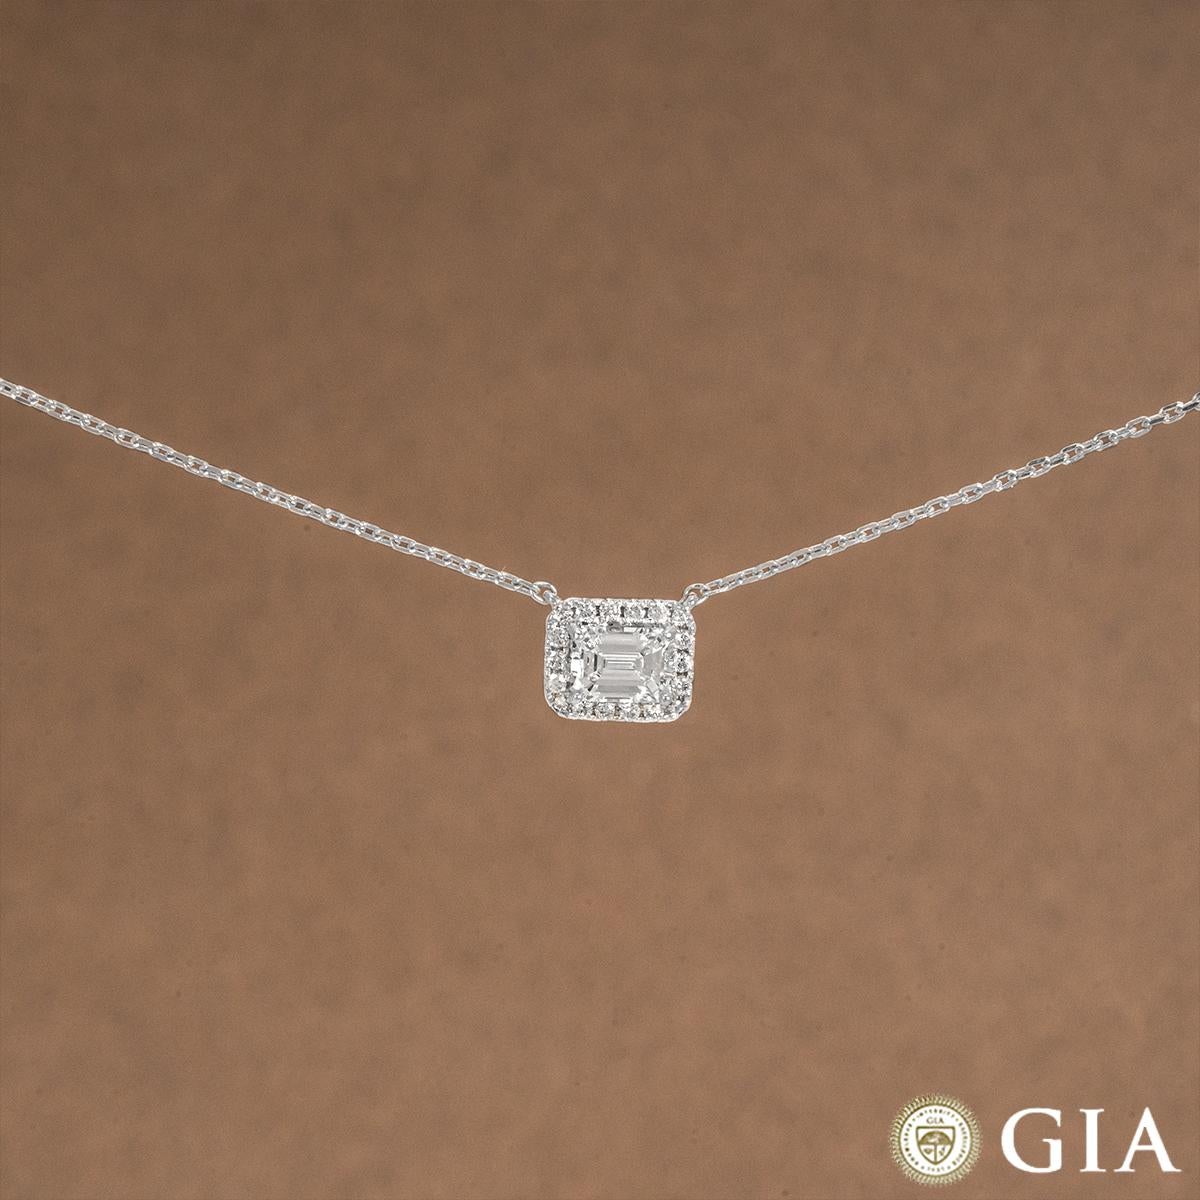 GIA Certified White Gold Emerald Cut Diamond Pendant 0.51 Carat F/VS1 For Sale 3